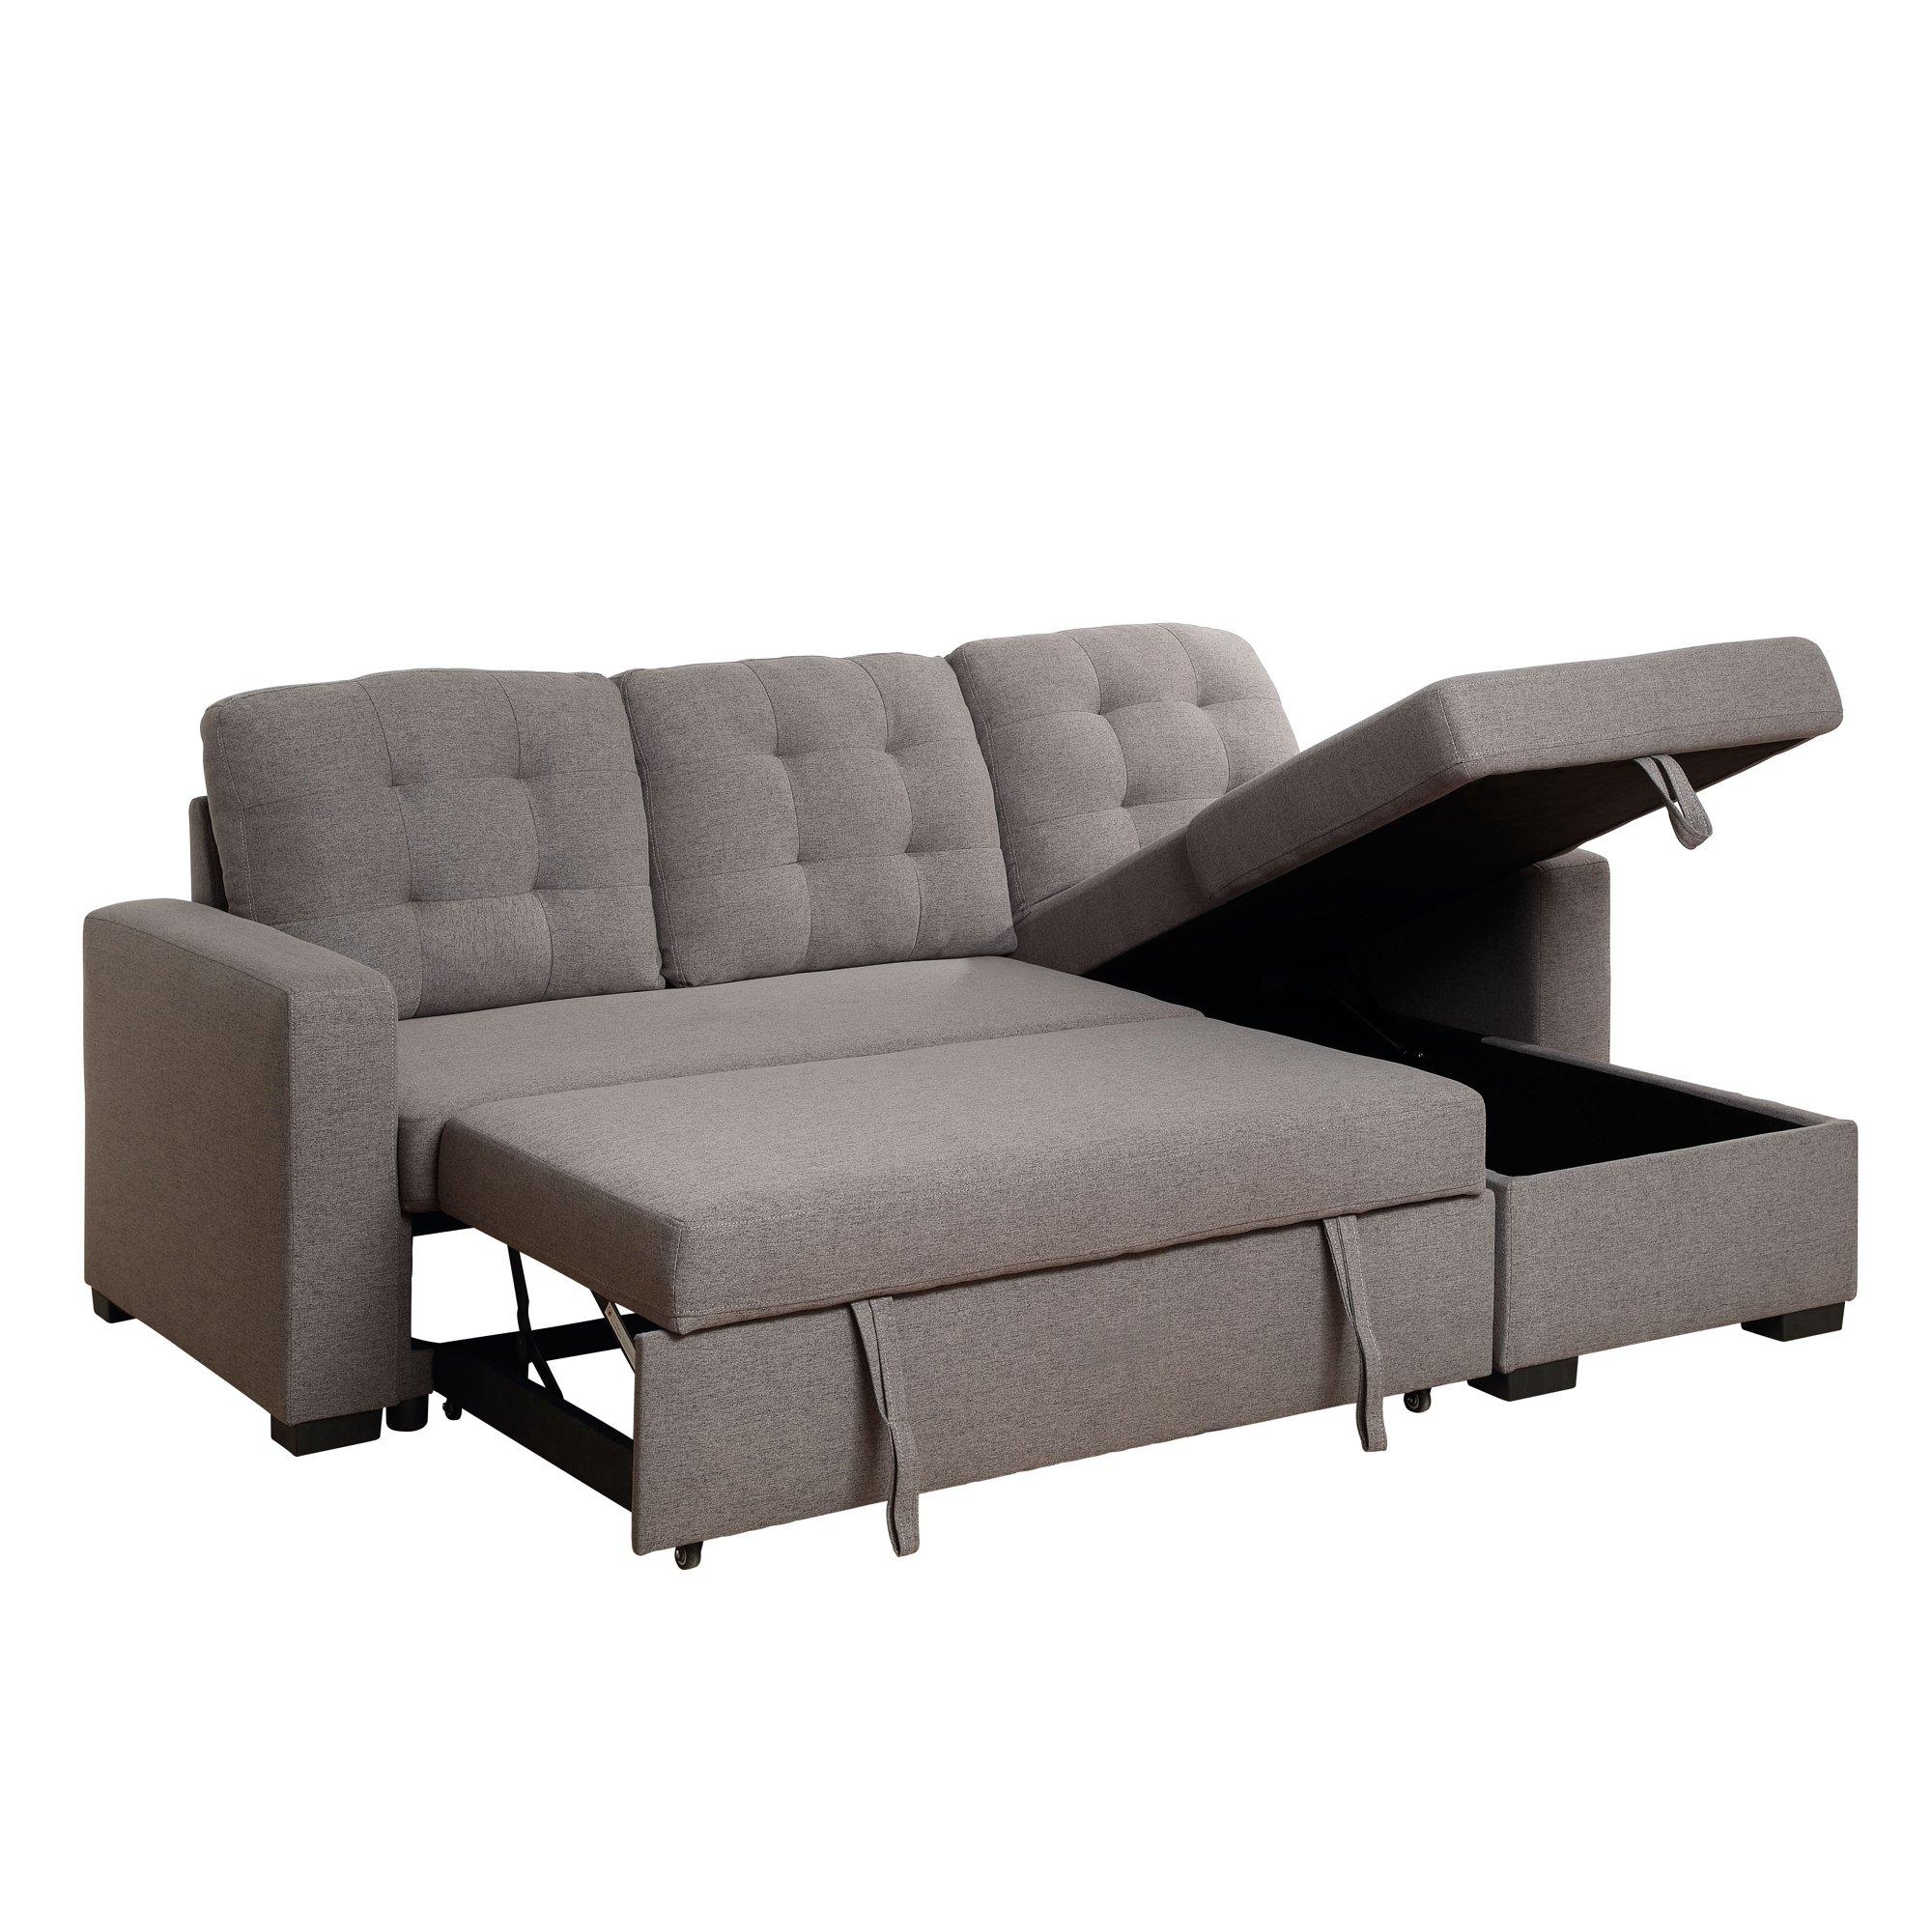 

    
55555-2pcs Transitional Gray Fabric Reversible L-shaped Sectional Sofa by Acme Chambord 55555-2pcs
